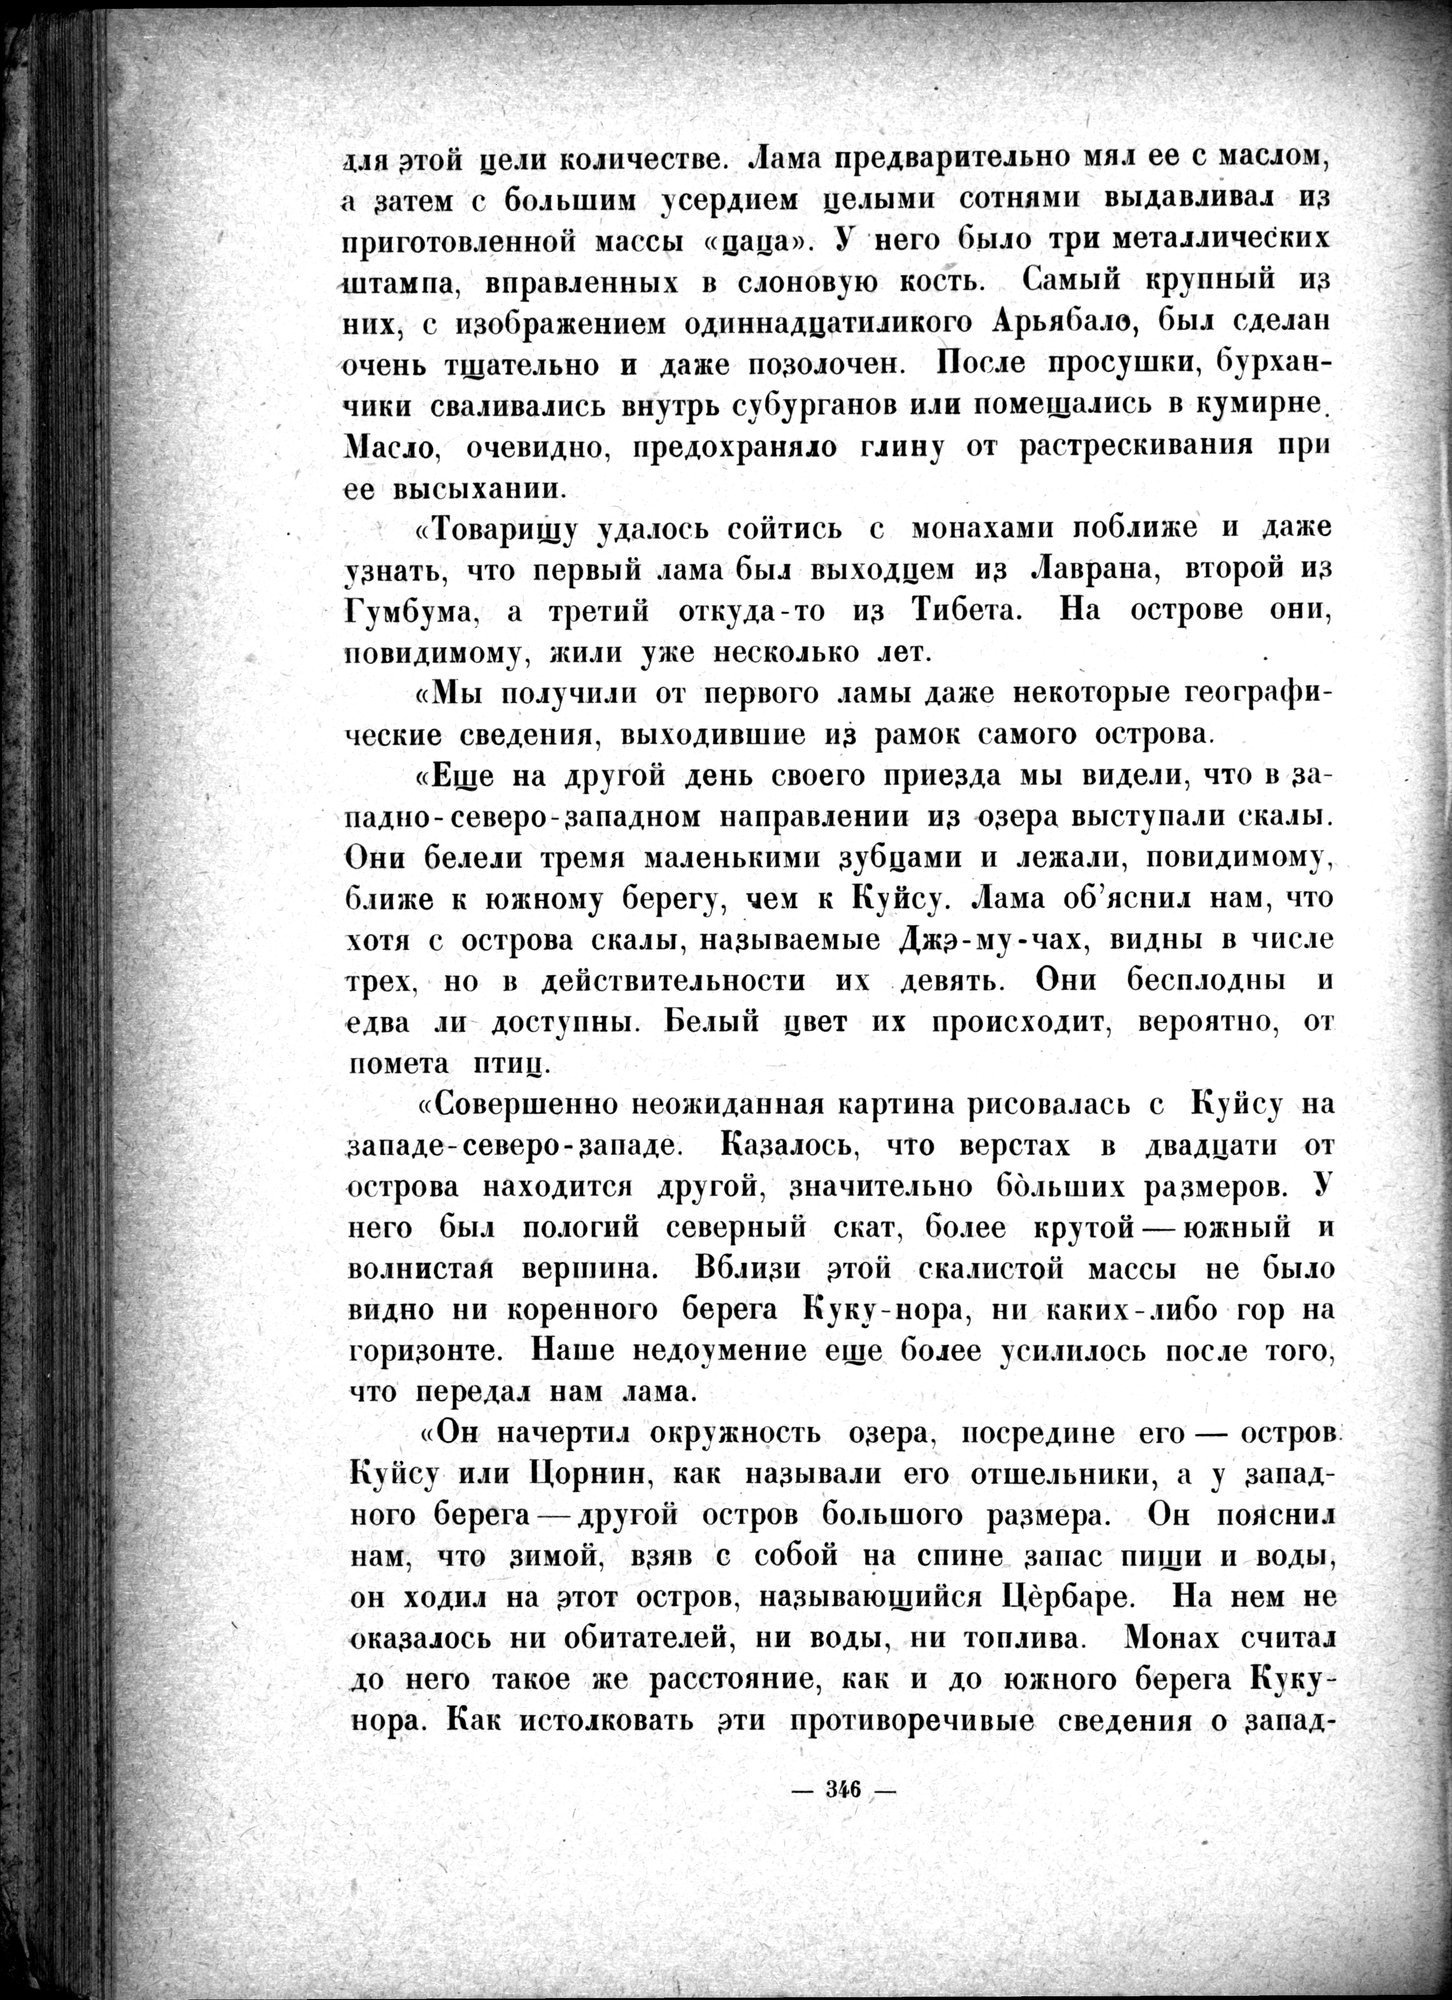 Mongoliya i Amdo i mertby gorod Khara-Khoto : vol.1 / Page 396 (Grayscale High Resolution Image)